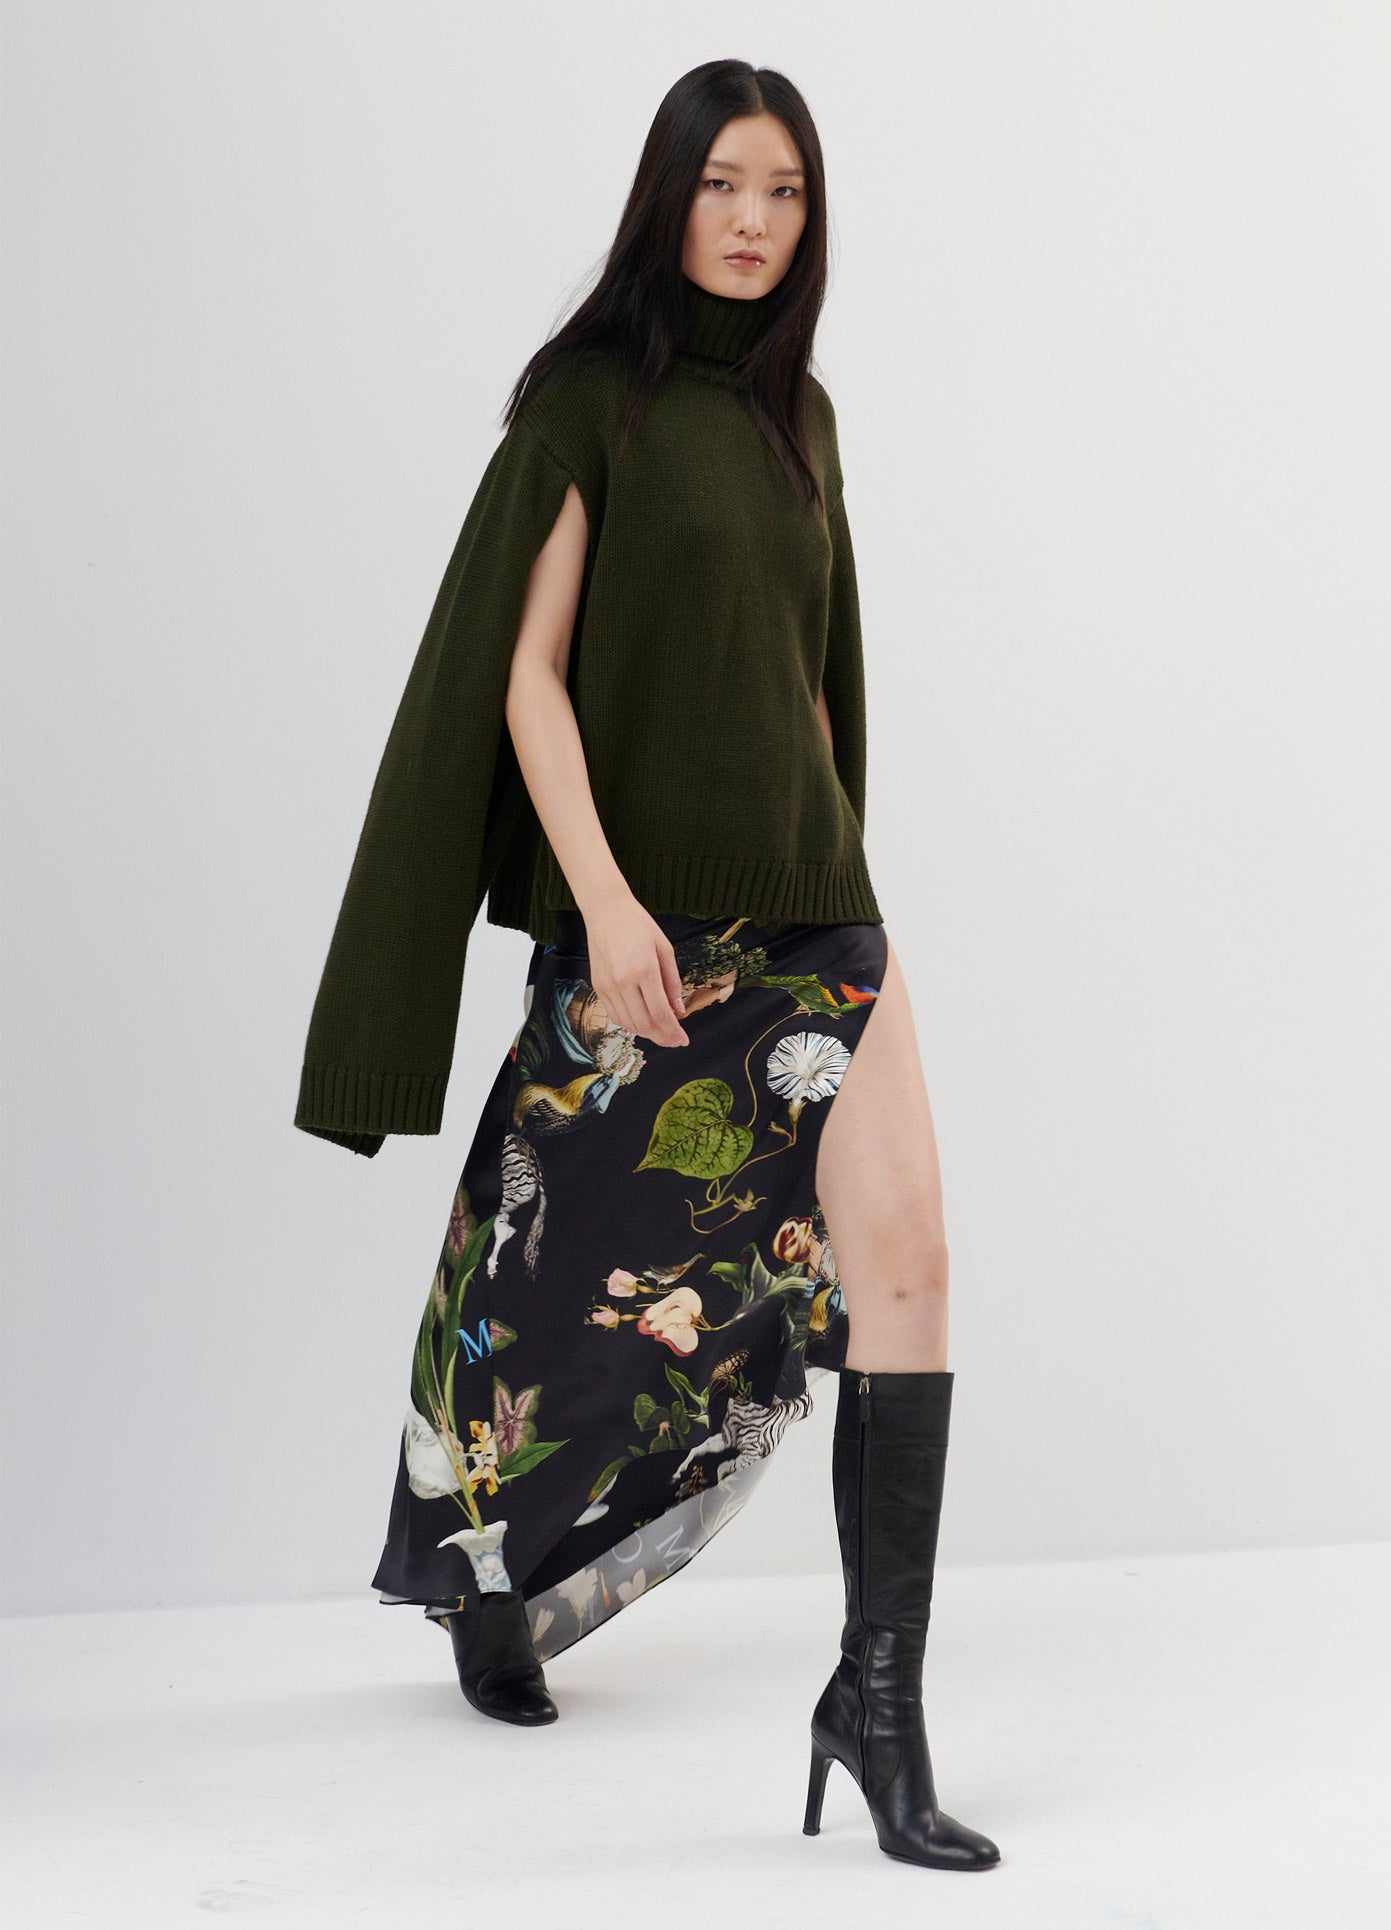 MONSE Print Satin Long Draped Skirt in Black Print on Model Walking Front View